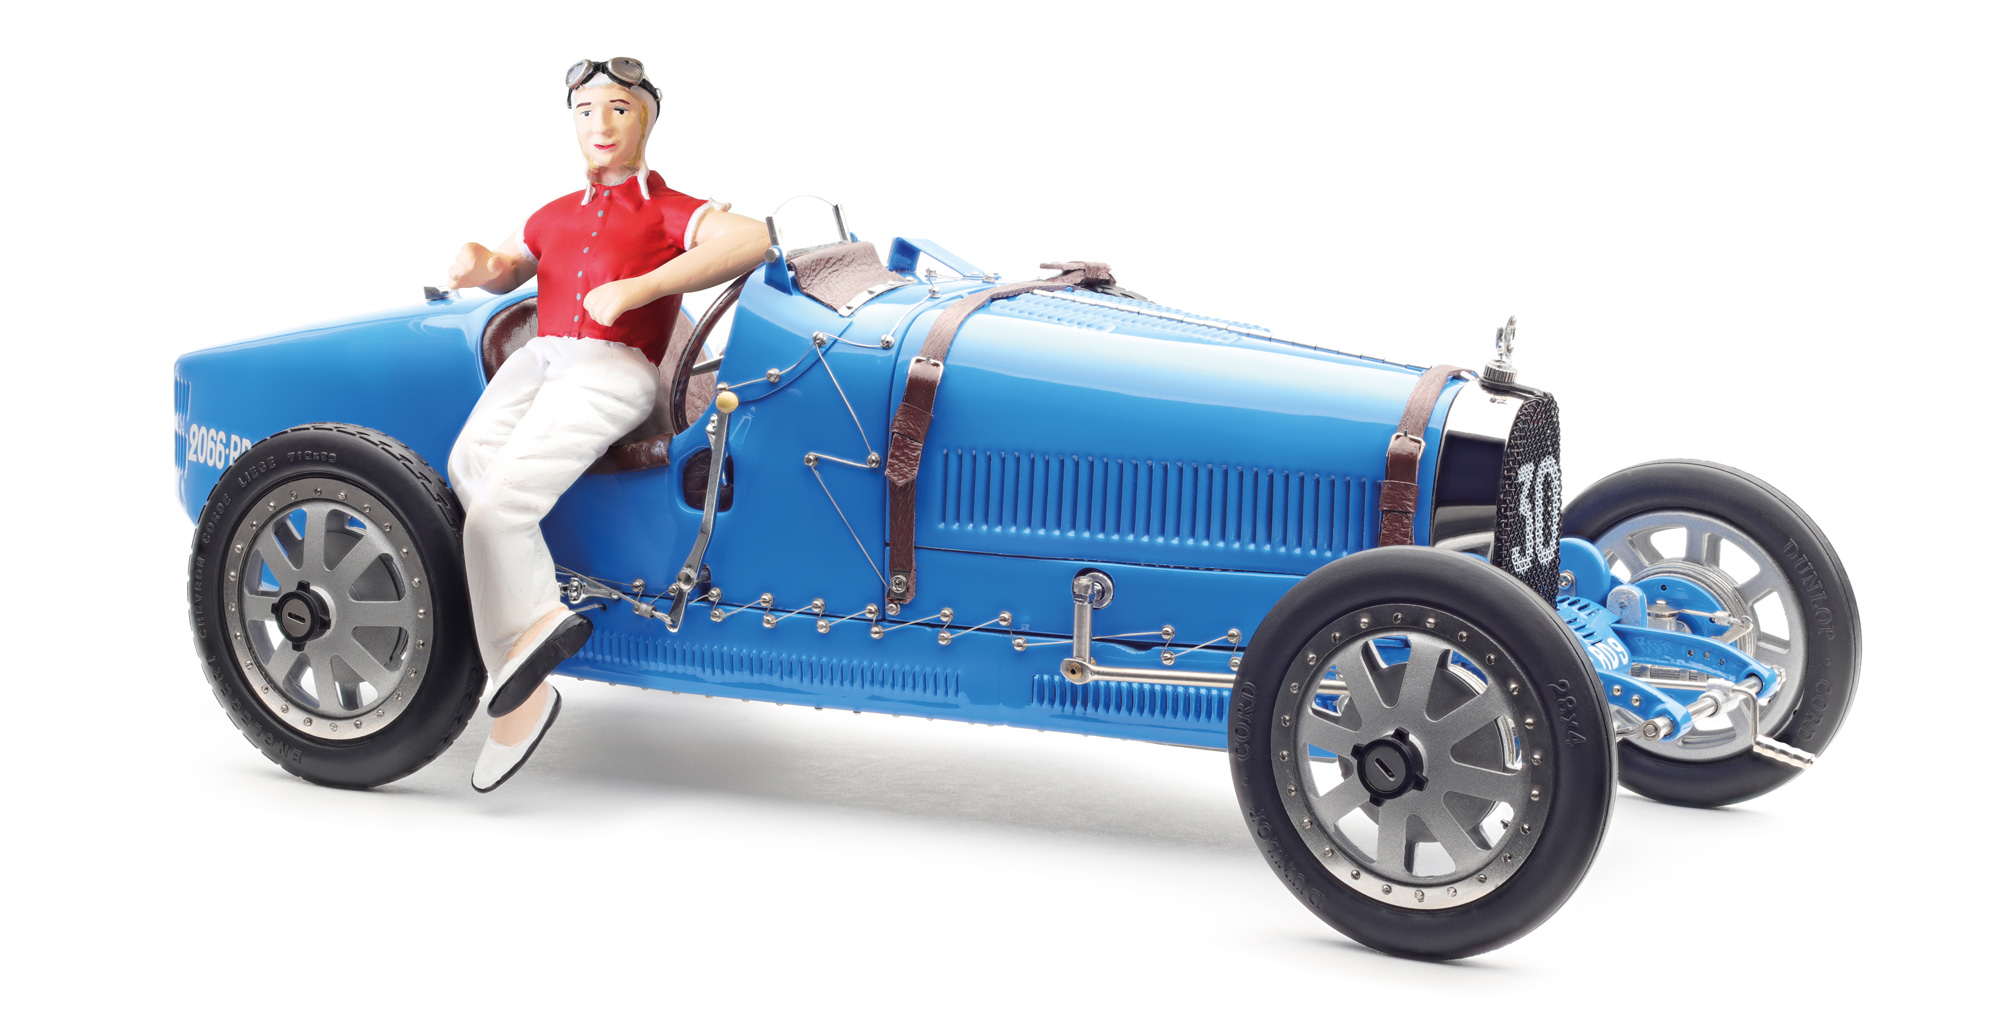 CMC Bugatti T35 #30 Grand Prix Blue Livery w/a Female Racer Figurine Ltd Ed to 600 pcs Worldwide 1/18 Diecast Model by CMC